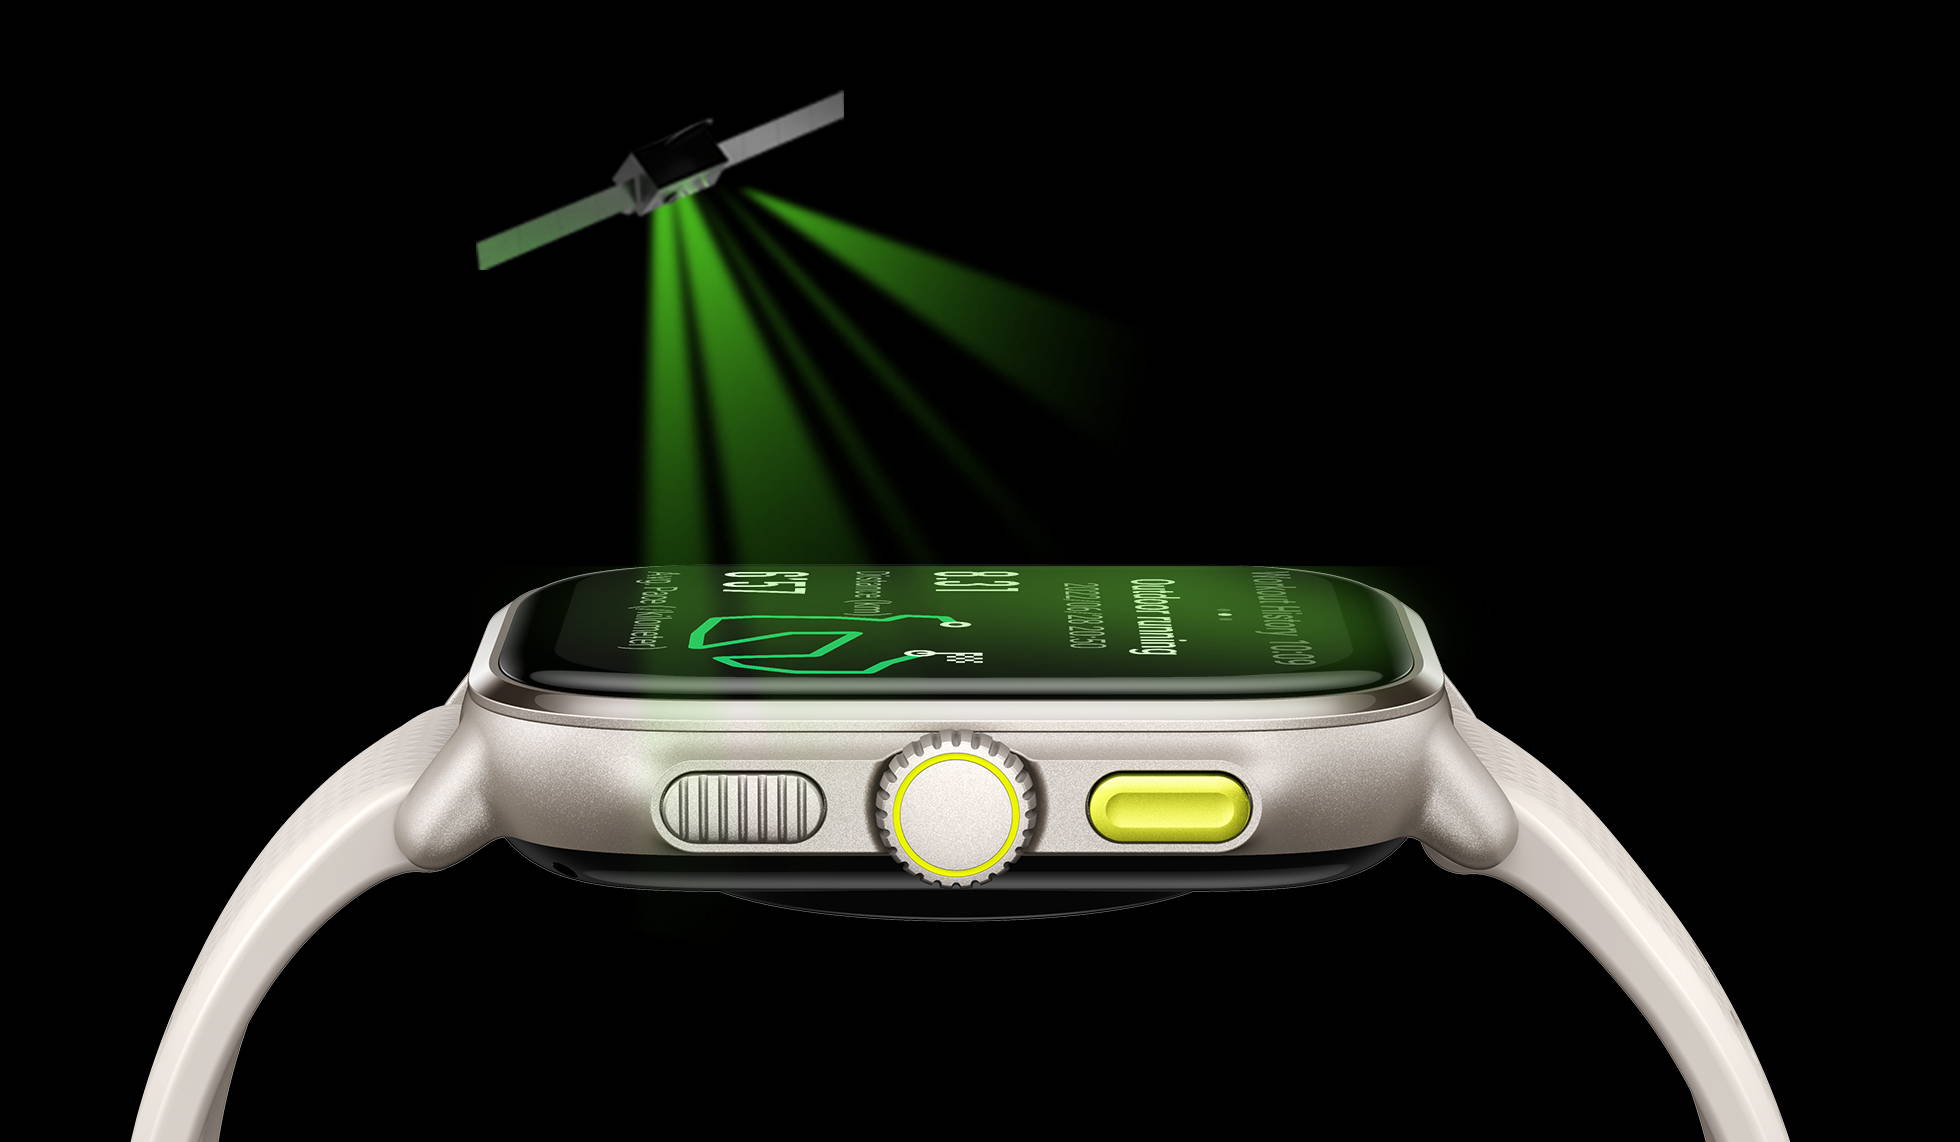 New Amazfit Cheetah Square Smartwatch Ultra Slim Dual-band GPS 150+Sports  Mode Monitoring Smart Watch